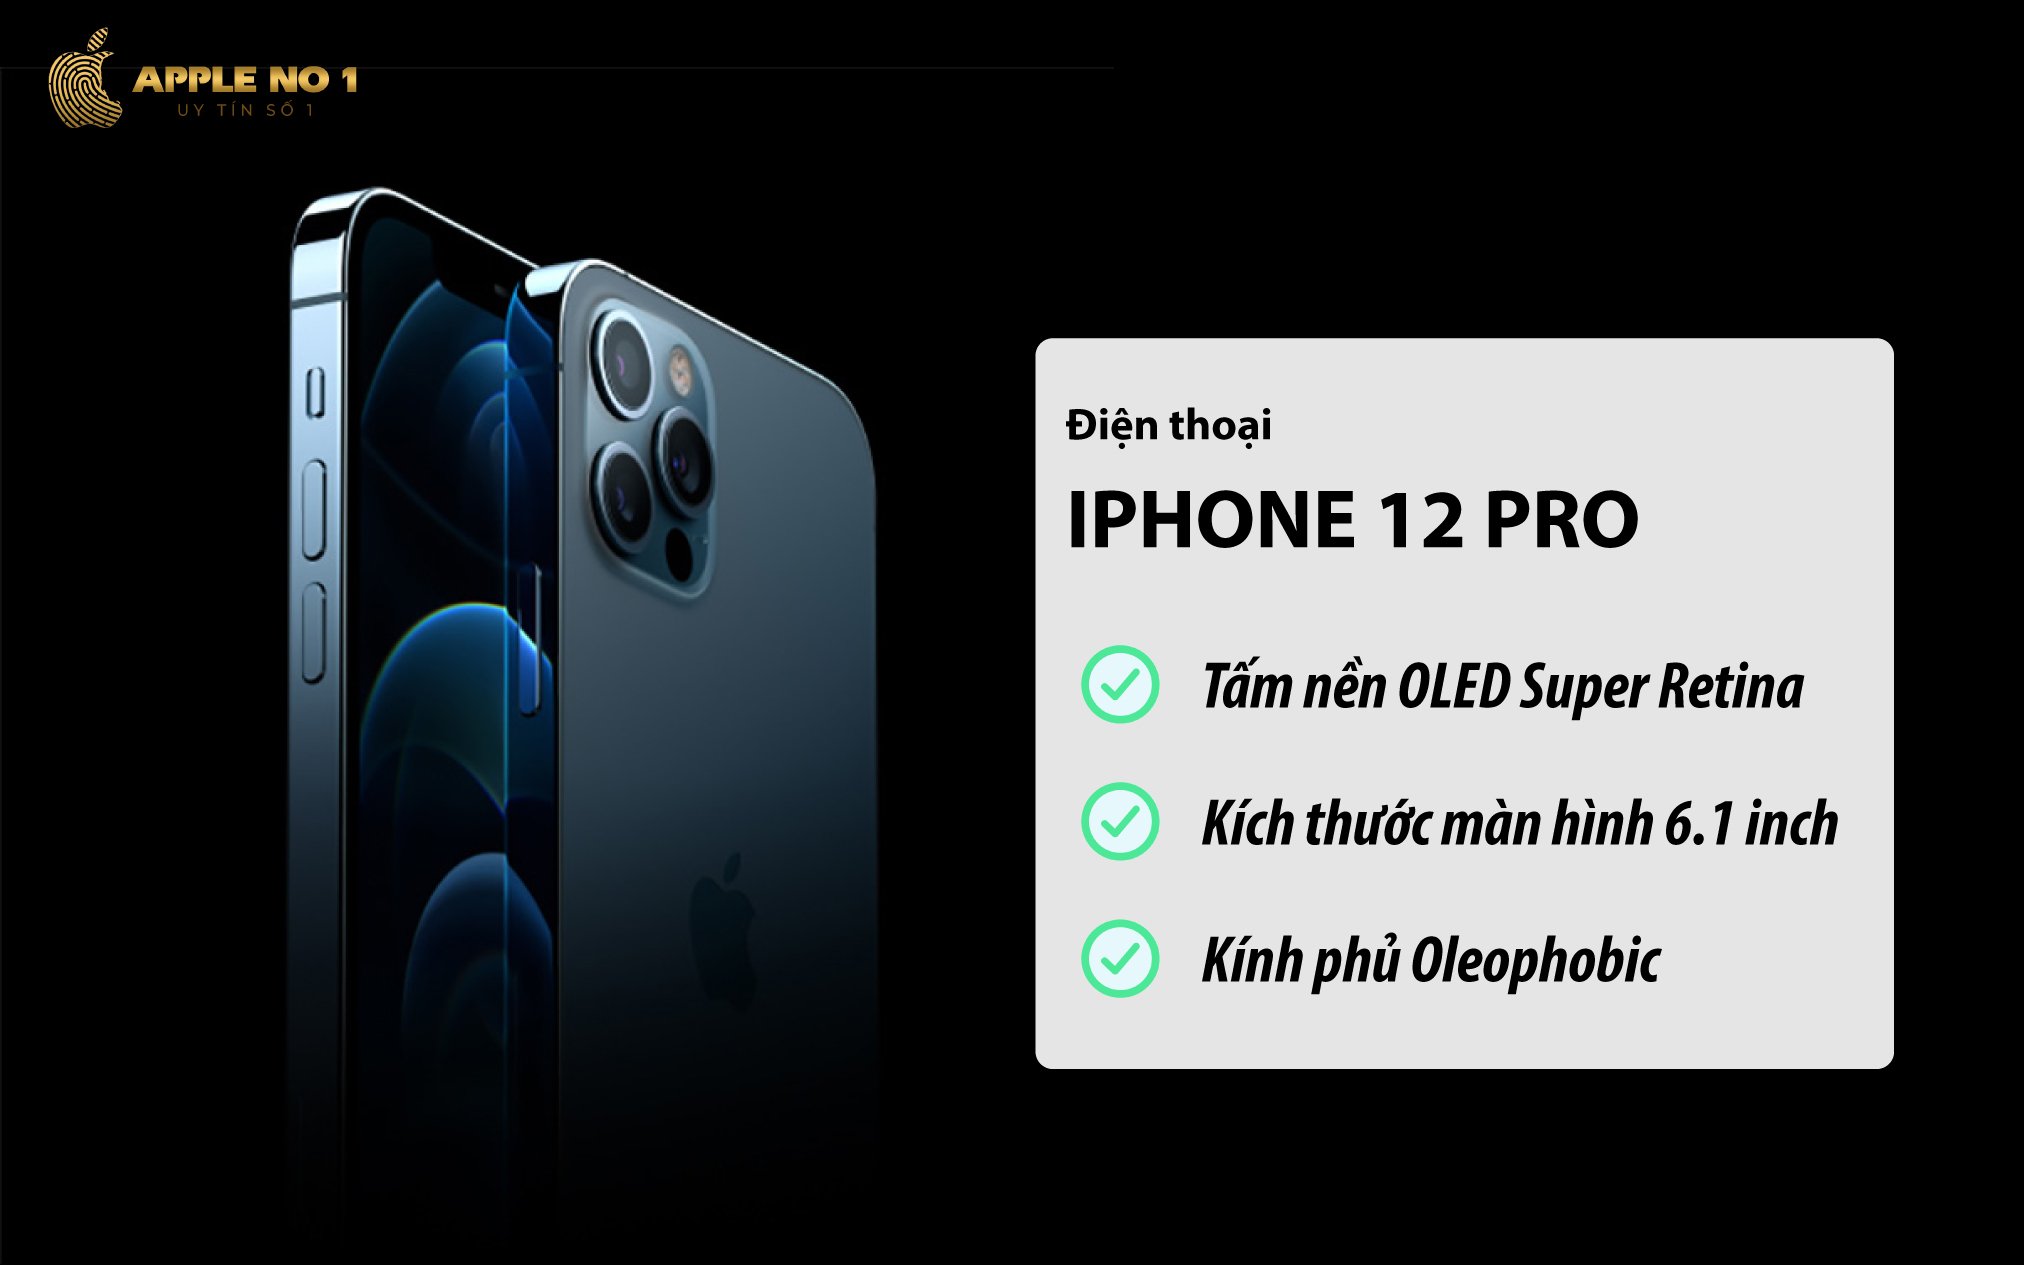 iphone 12 pro so huu man hinh 6.1 inch cung lop phu oleophobic